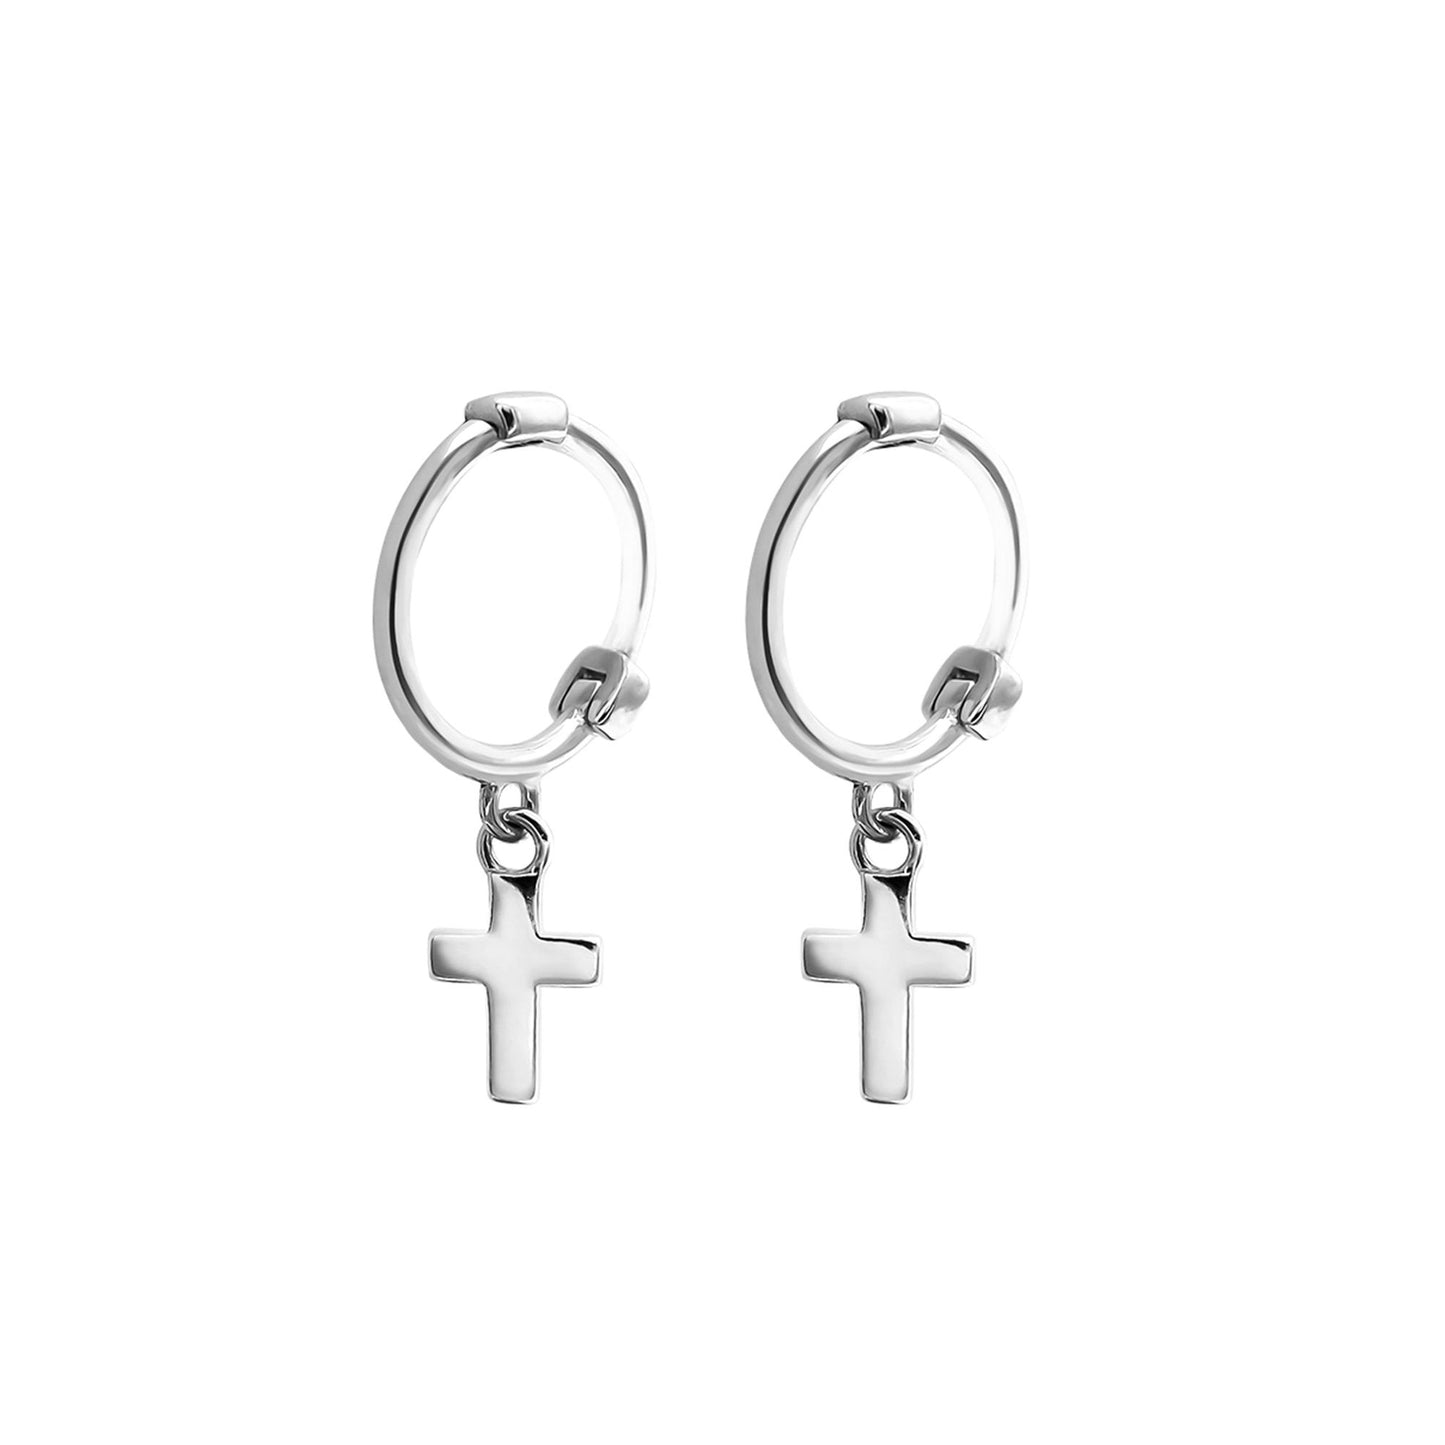 Unisex 8mm Sterling Silver Cross Hoop Earrings with Drop Charm